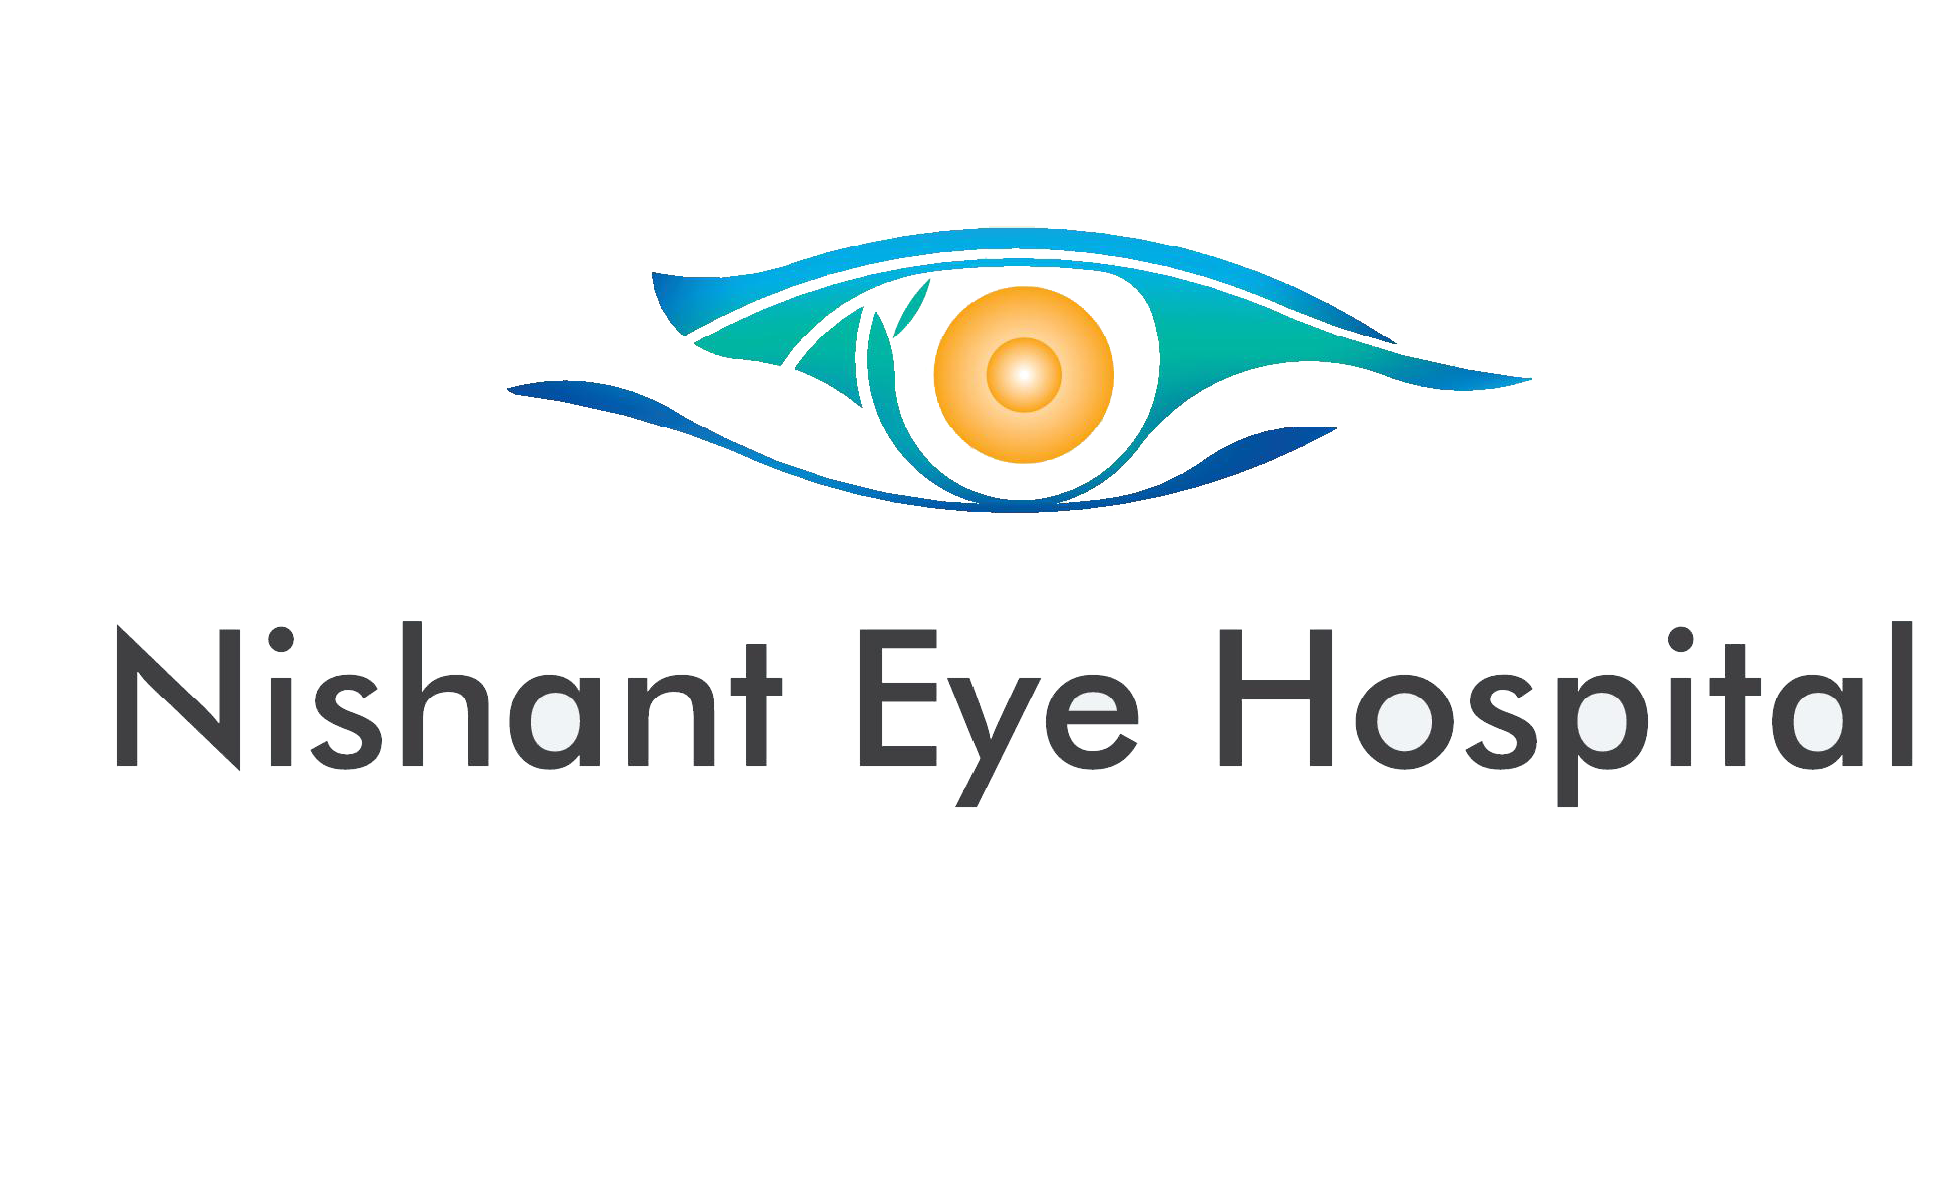 Nishant Eye Hospital|Veterinary|Medical Services